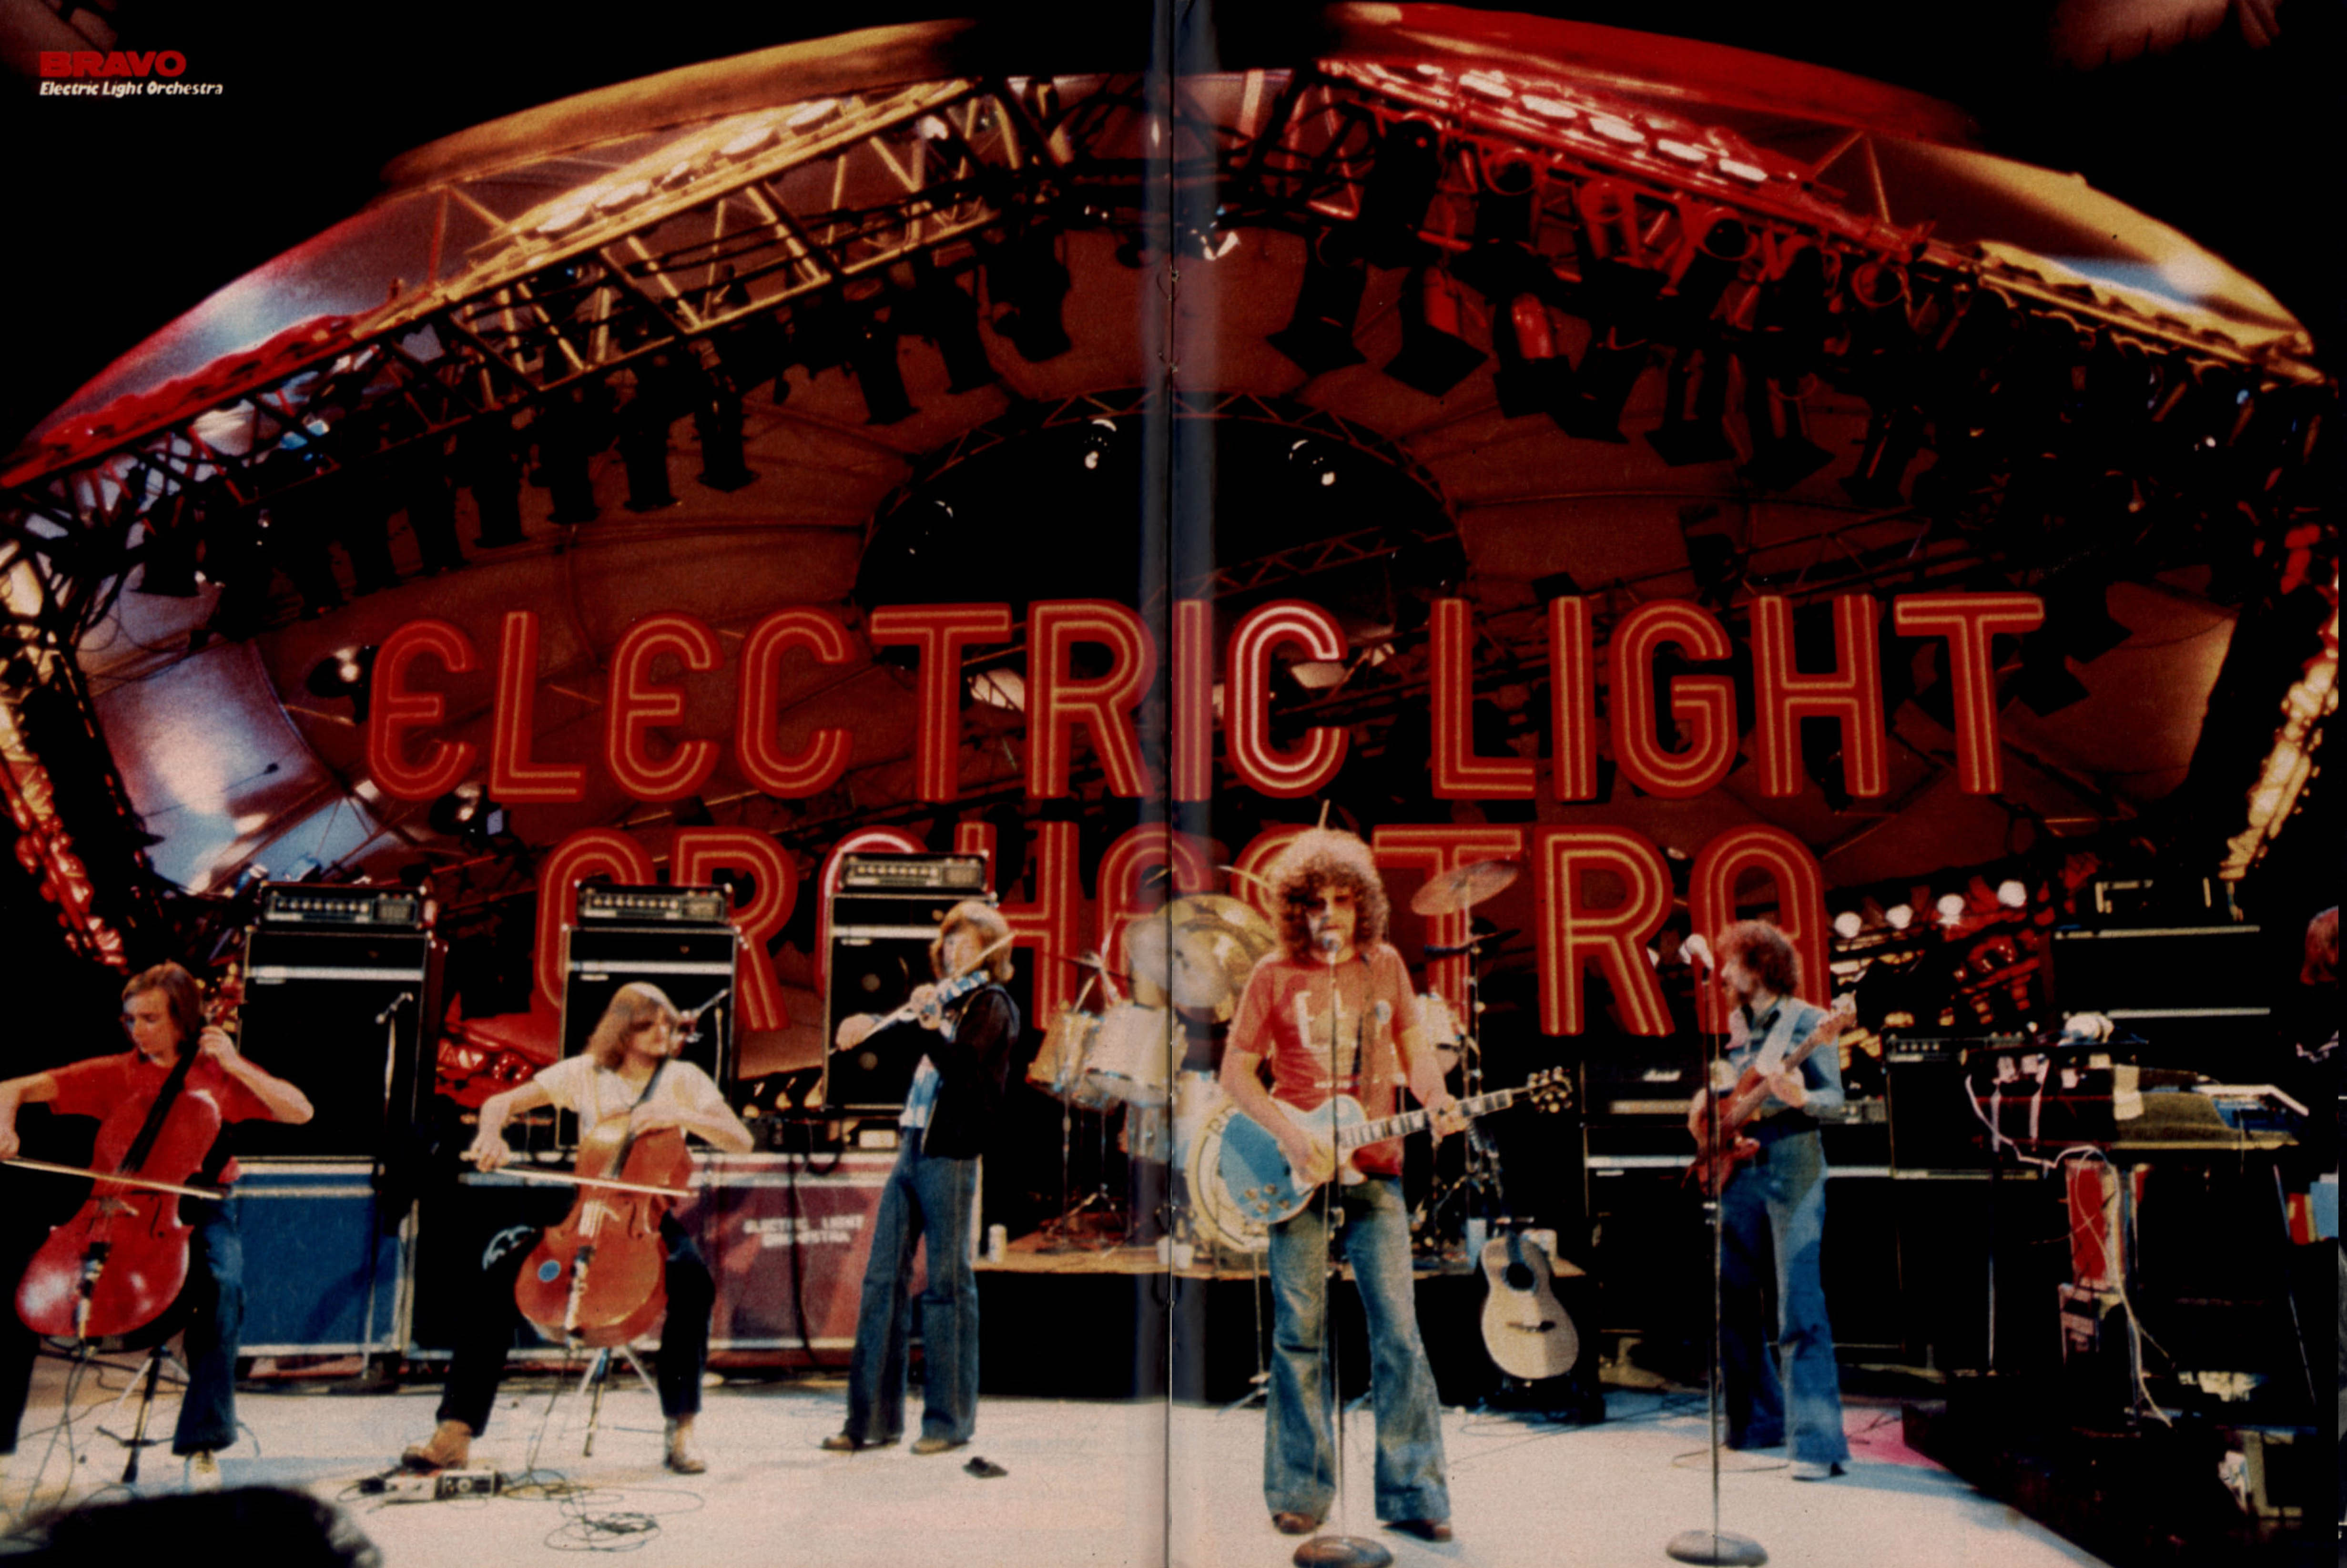 Electric light orchestra concert garetse